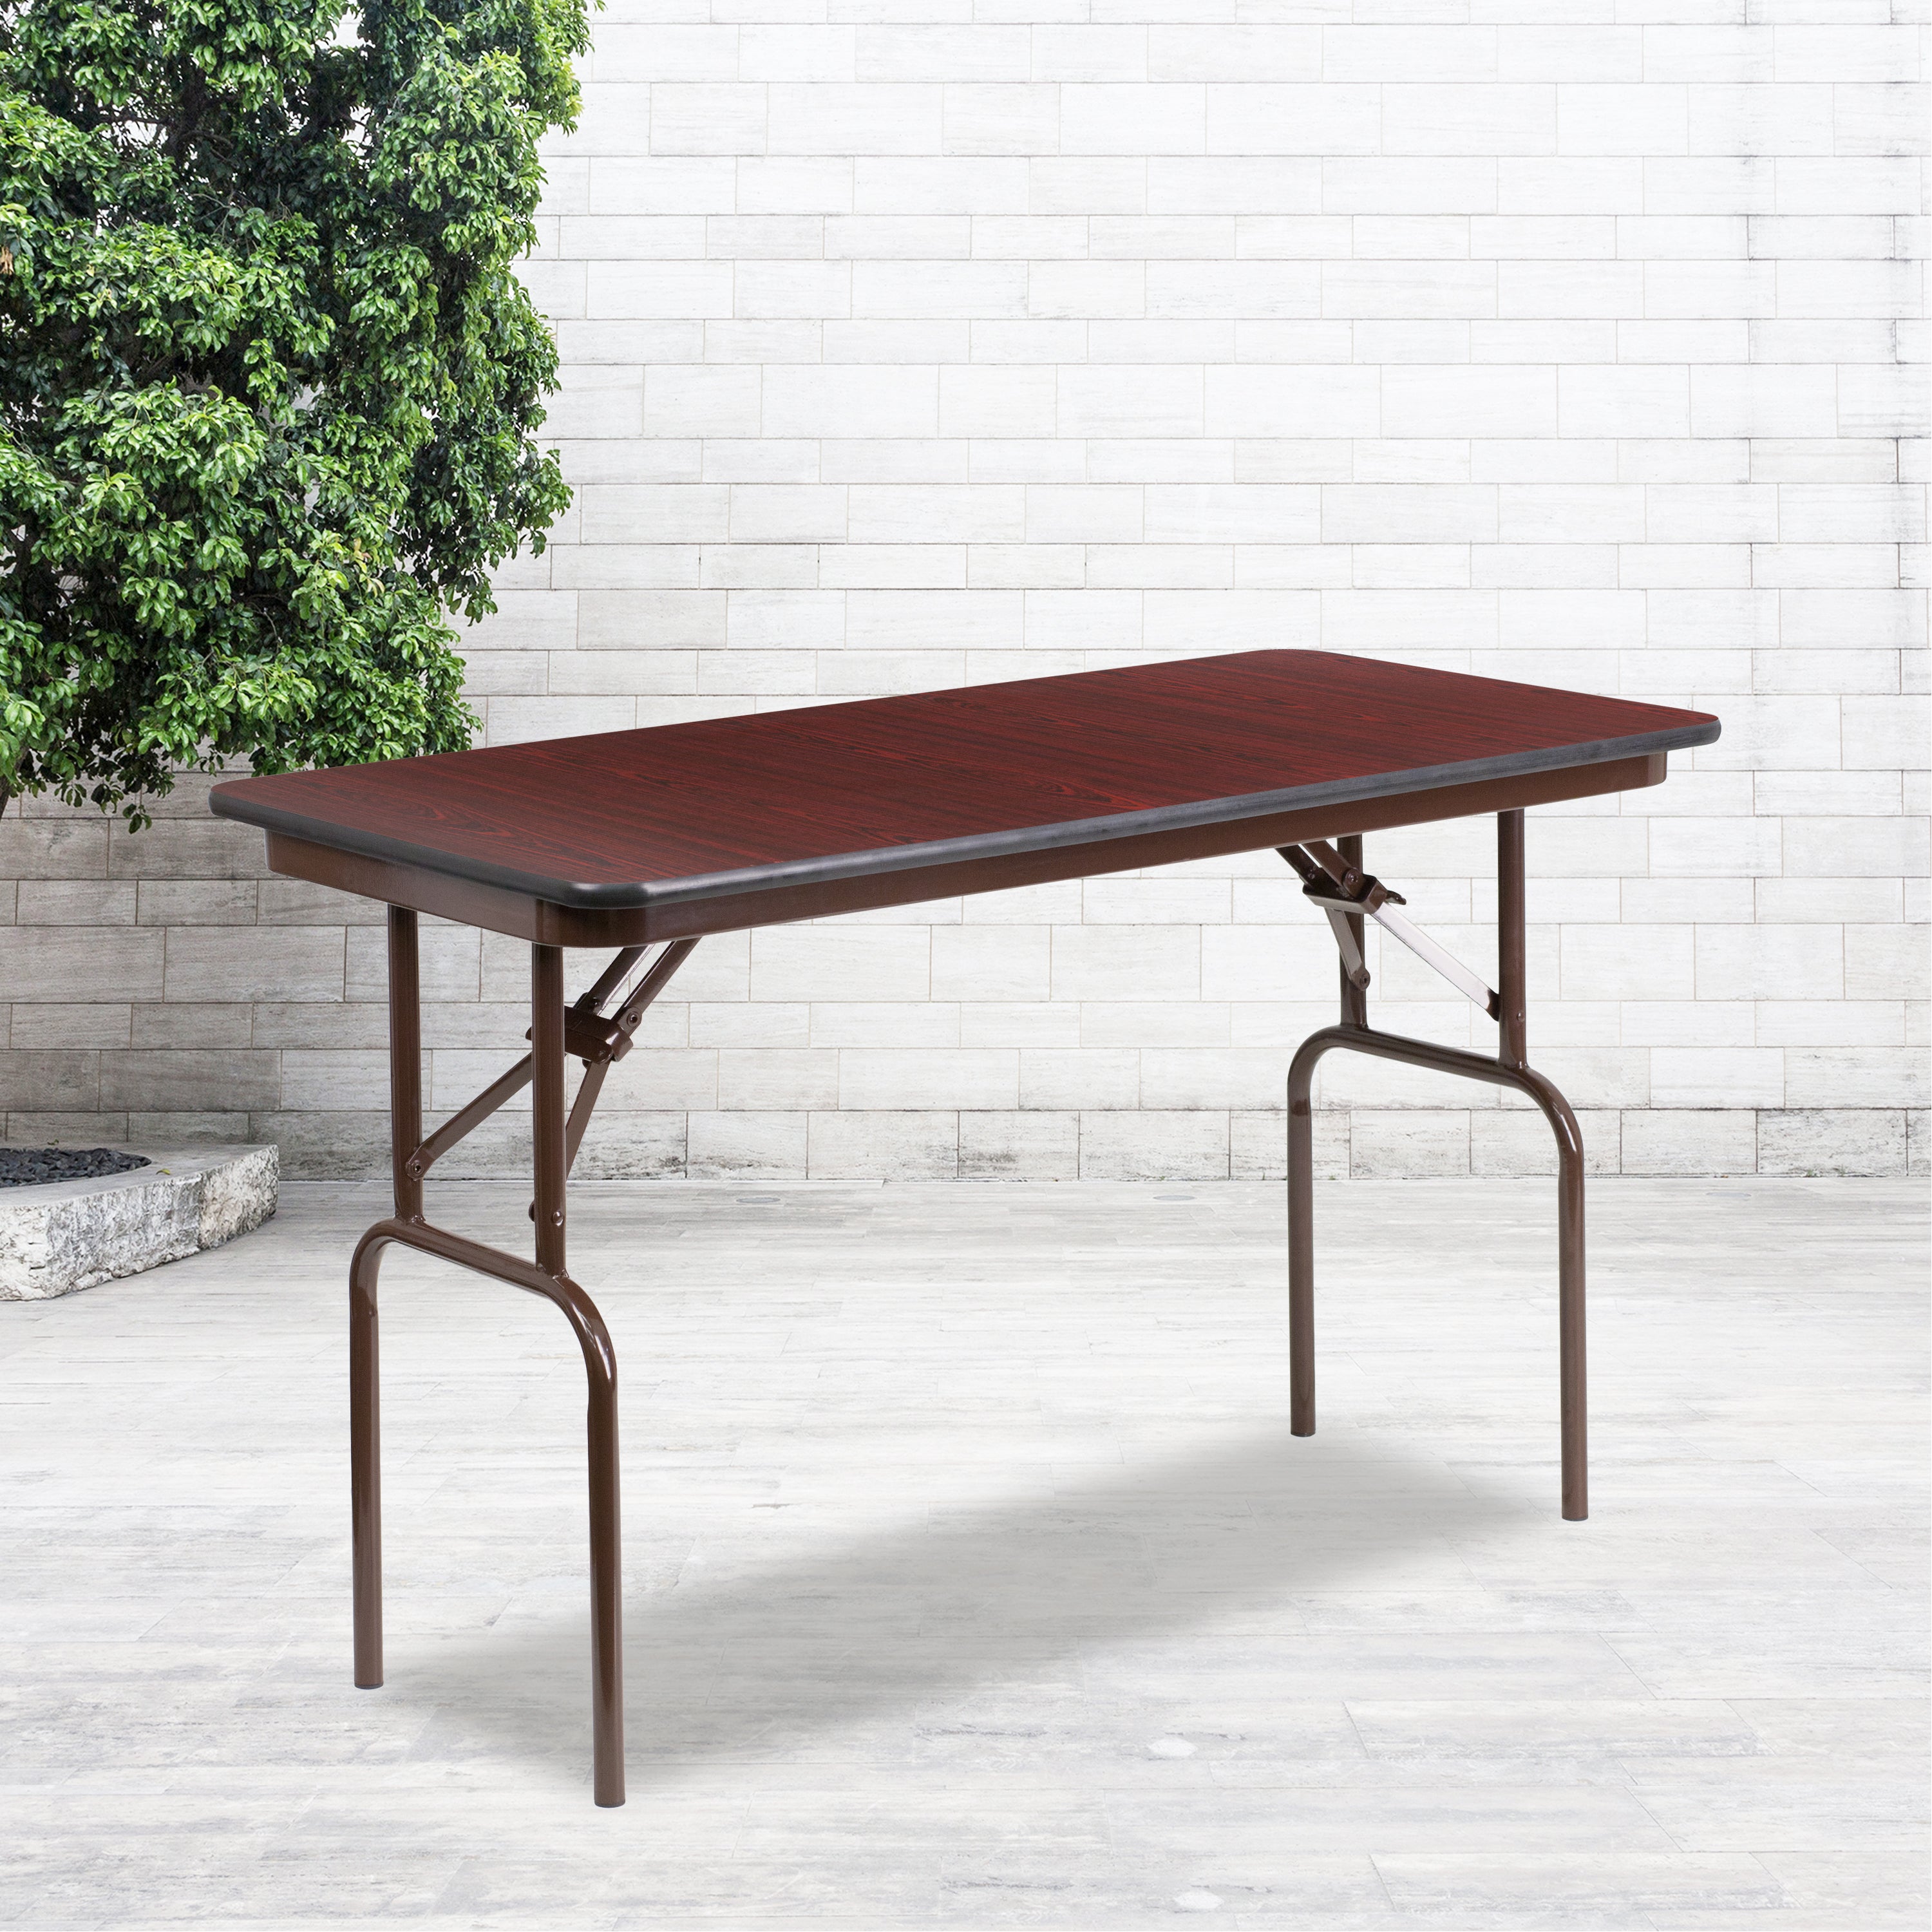 4-Foot Mahogany Melamine Laminate Folding Banquet Table-Rectangular Melamine Folding Table-Flash Furniture-Wall2Wall Furnishings